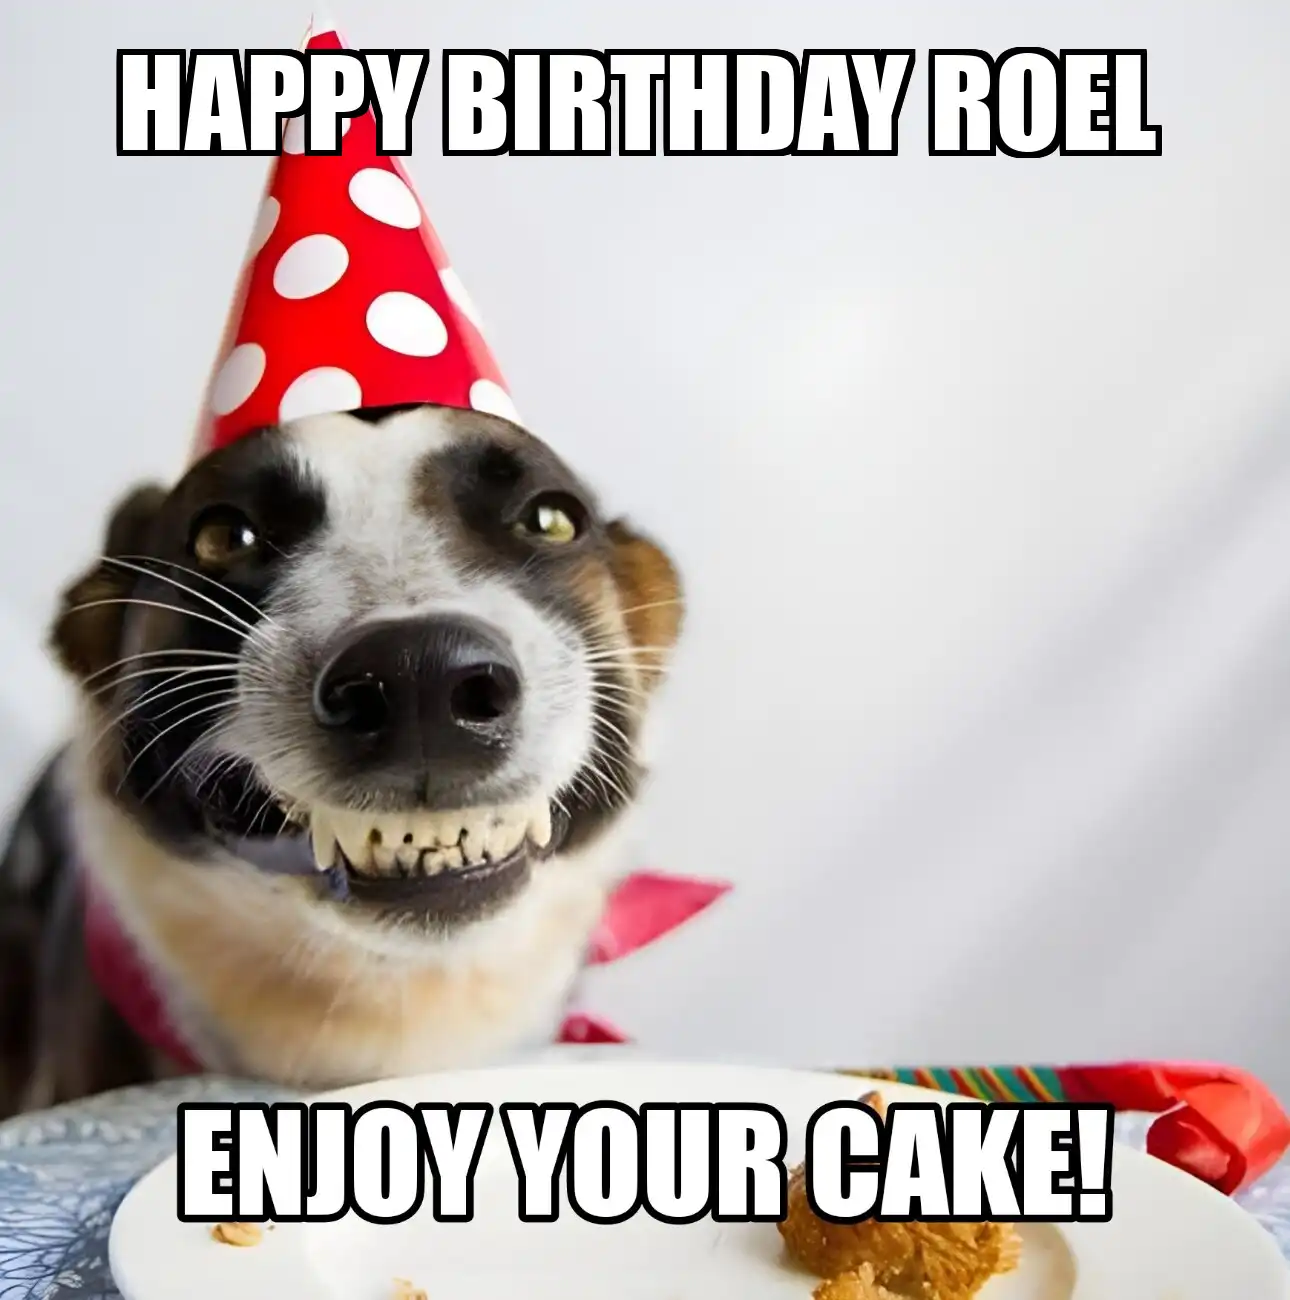 Happy Birthday Roel Enjoy Your Cake Dog Meme